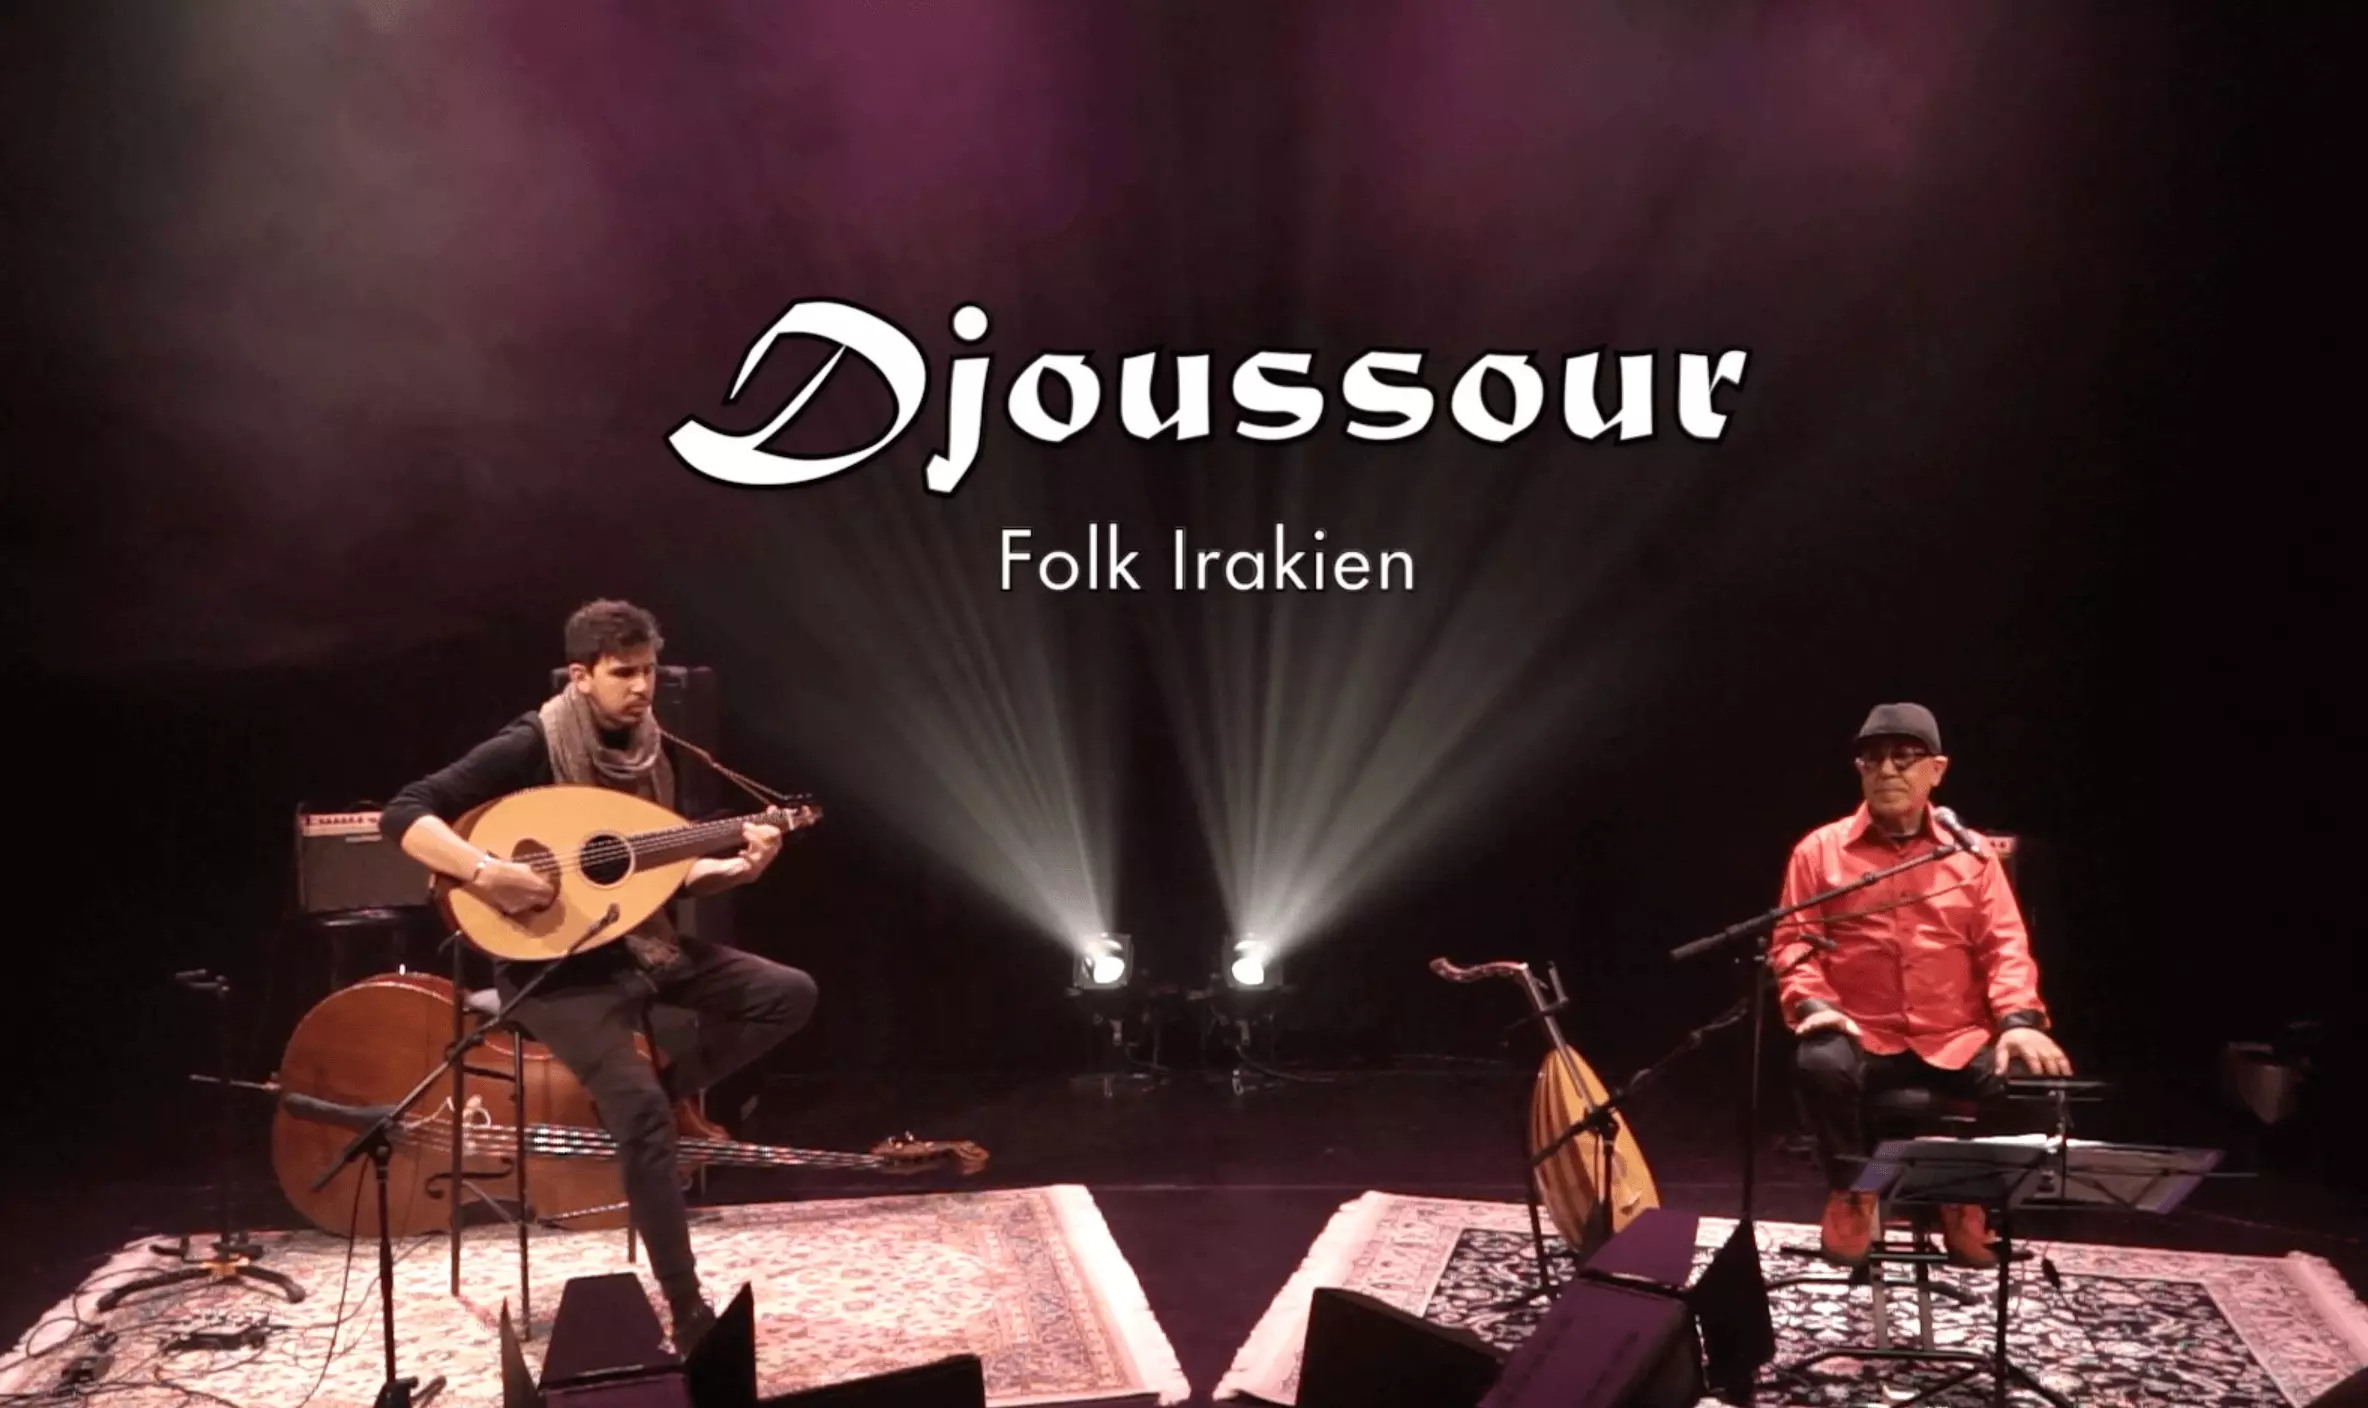 Concerts-Concert Djoussour (duo folk irakien)